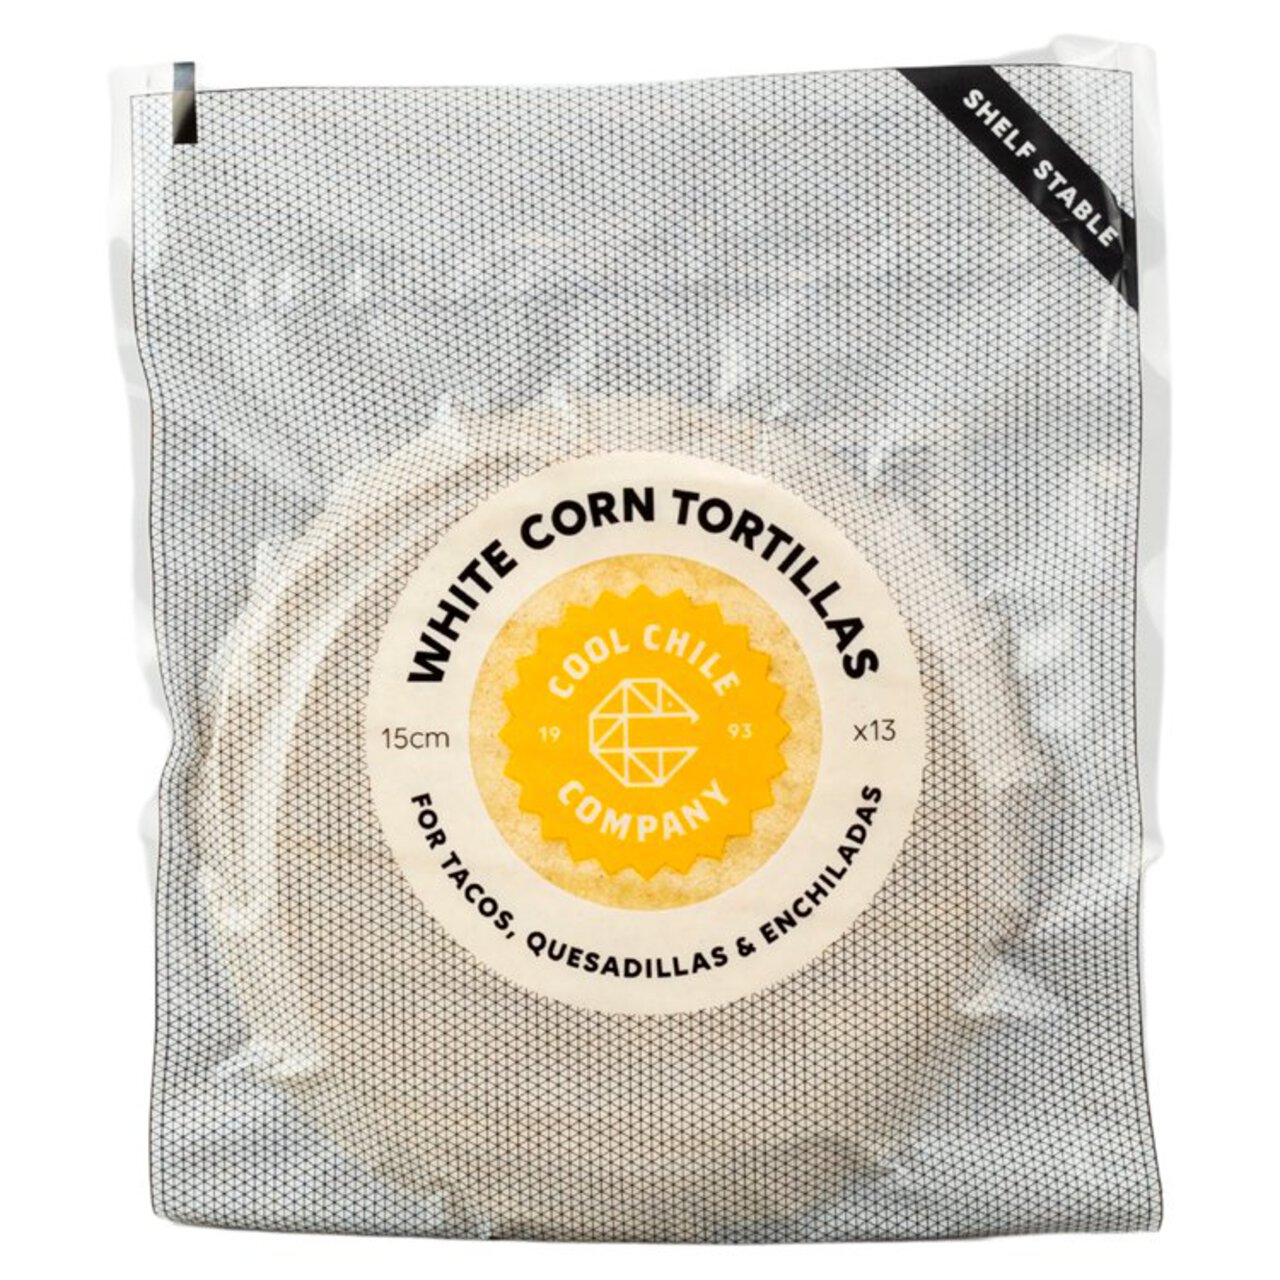 Cool Chile Corn Tortillas Taco Wraps- Gluten Free 13 per pack